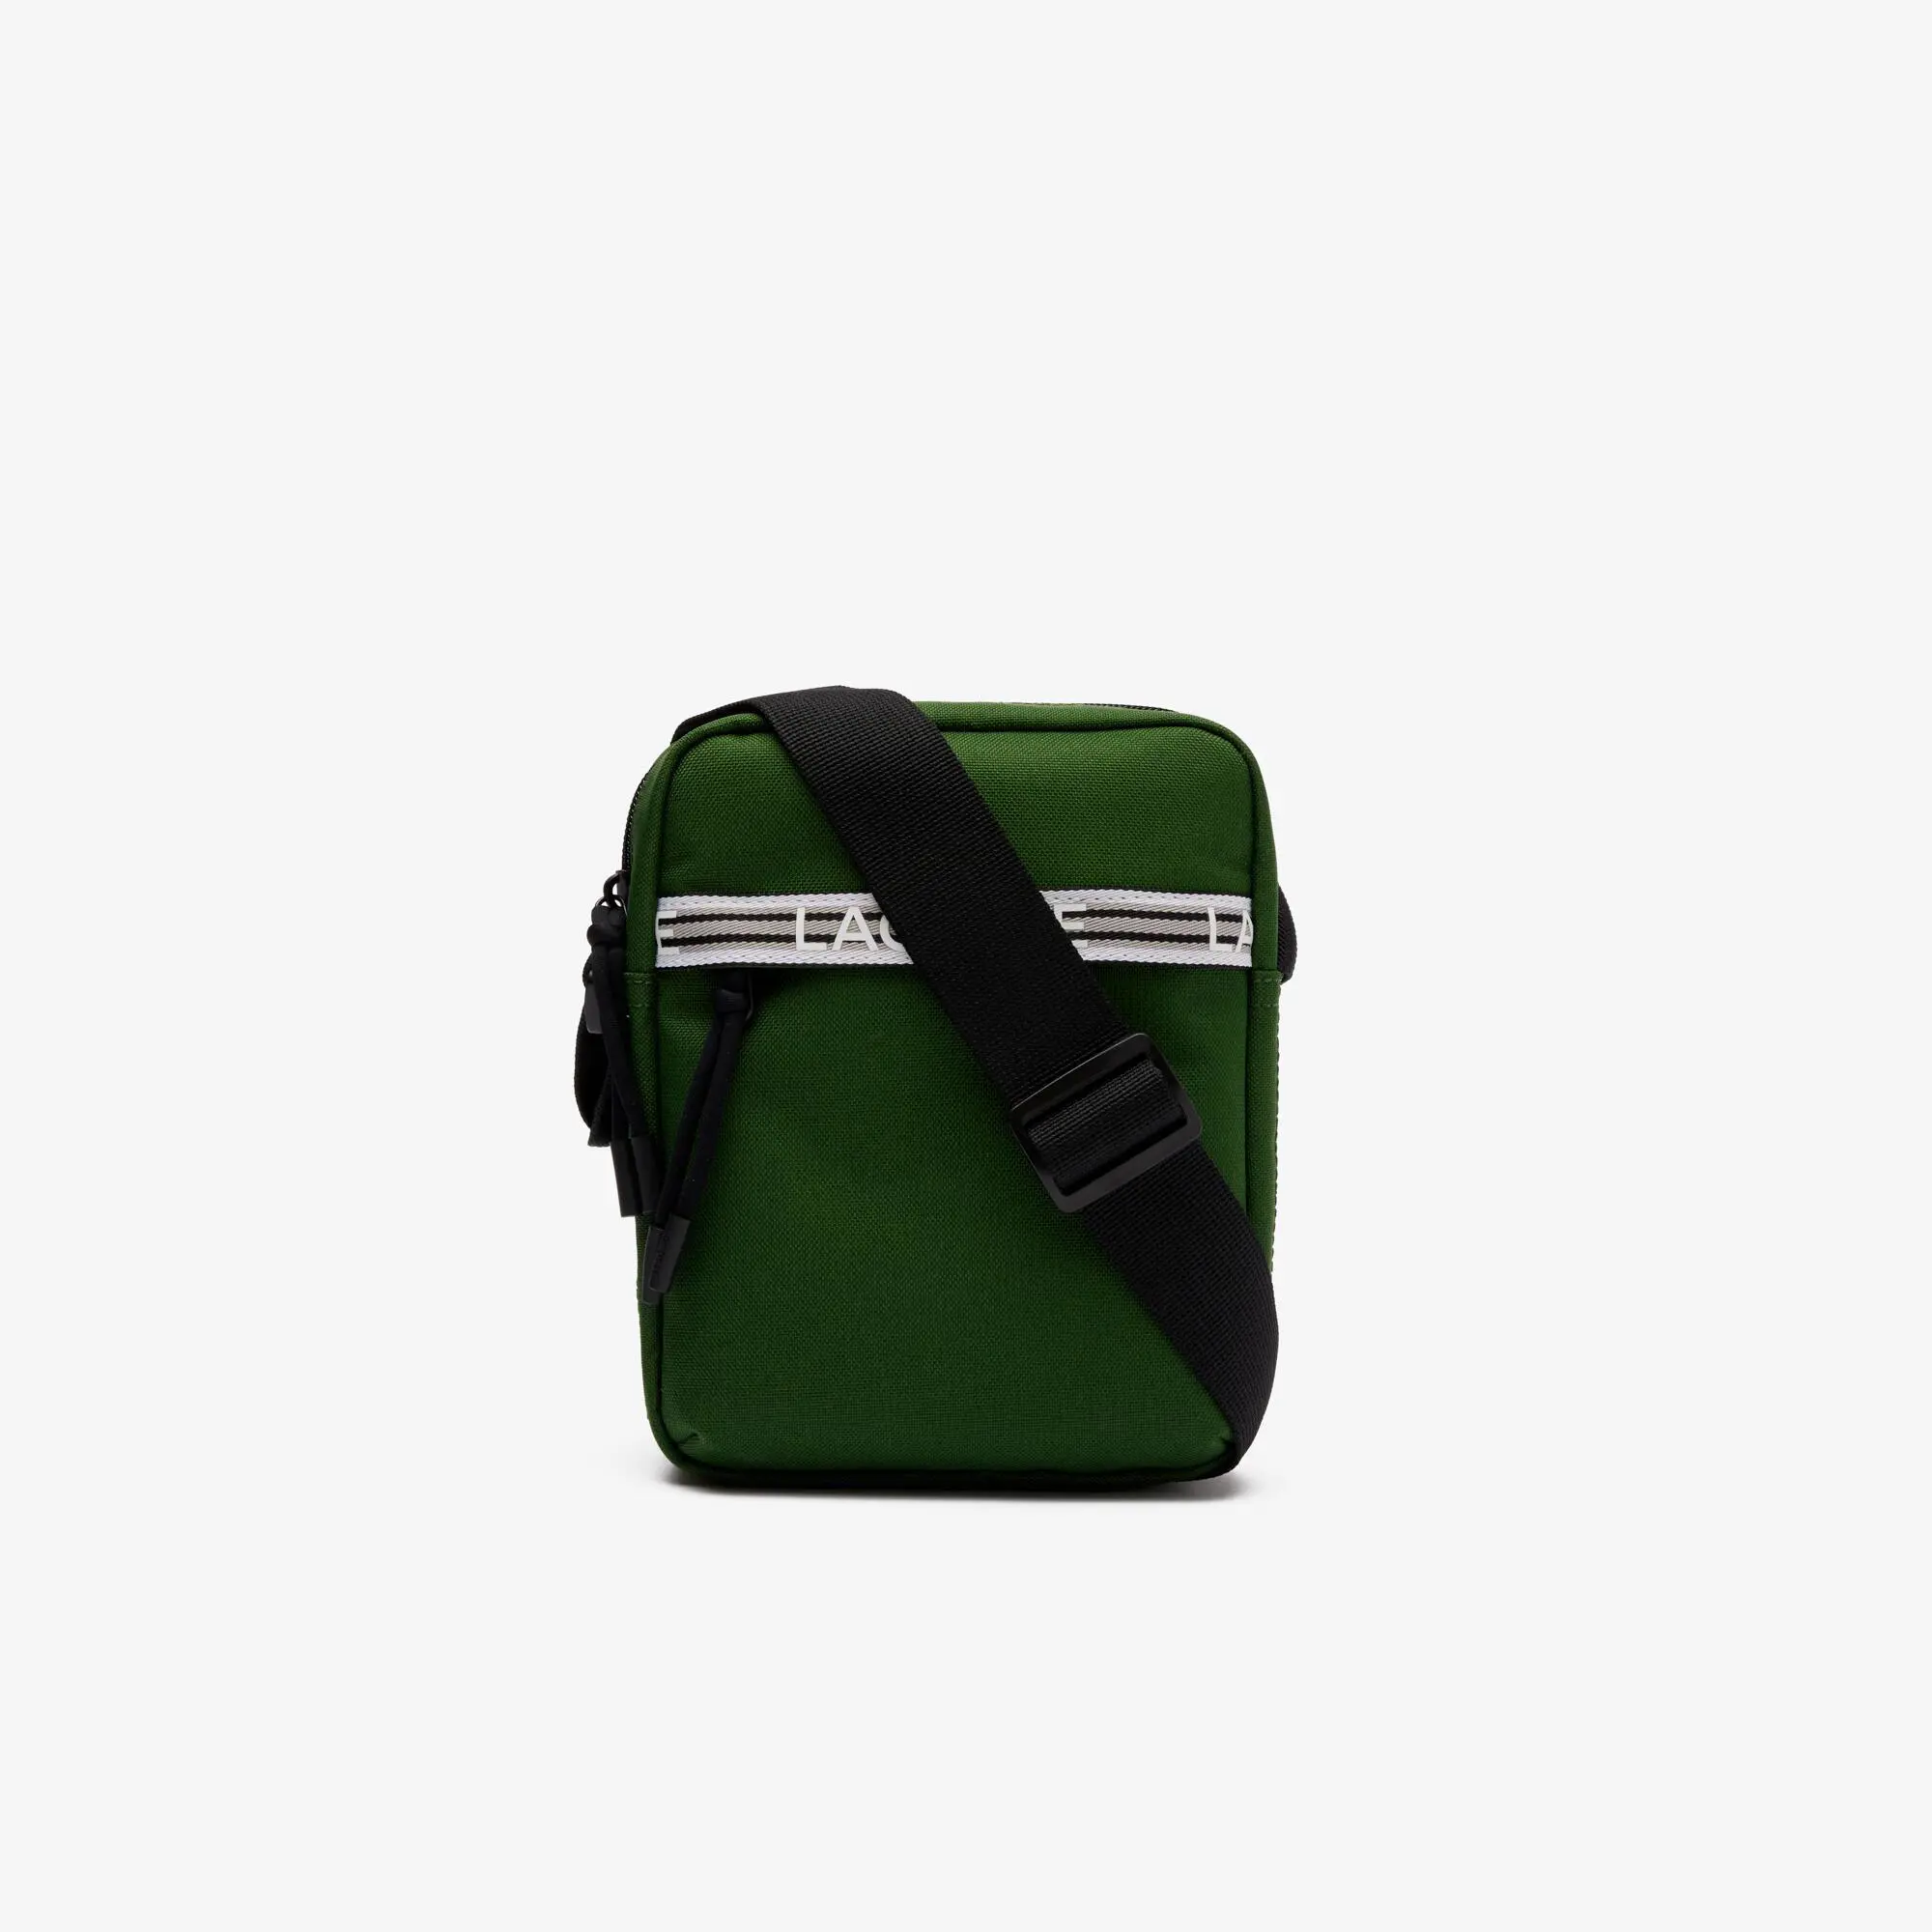 Lacoste Men’s Lacoste Neocroc Recycled Fiber Vertical Messenger Bag. 1